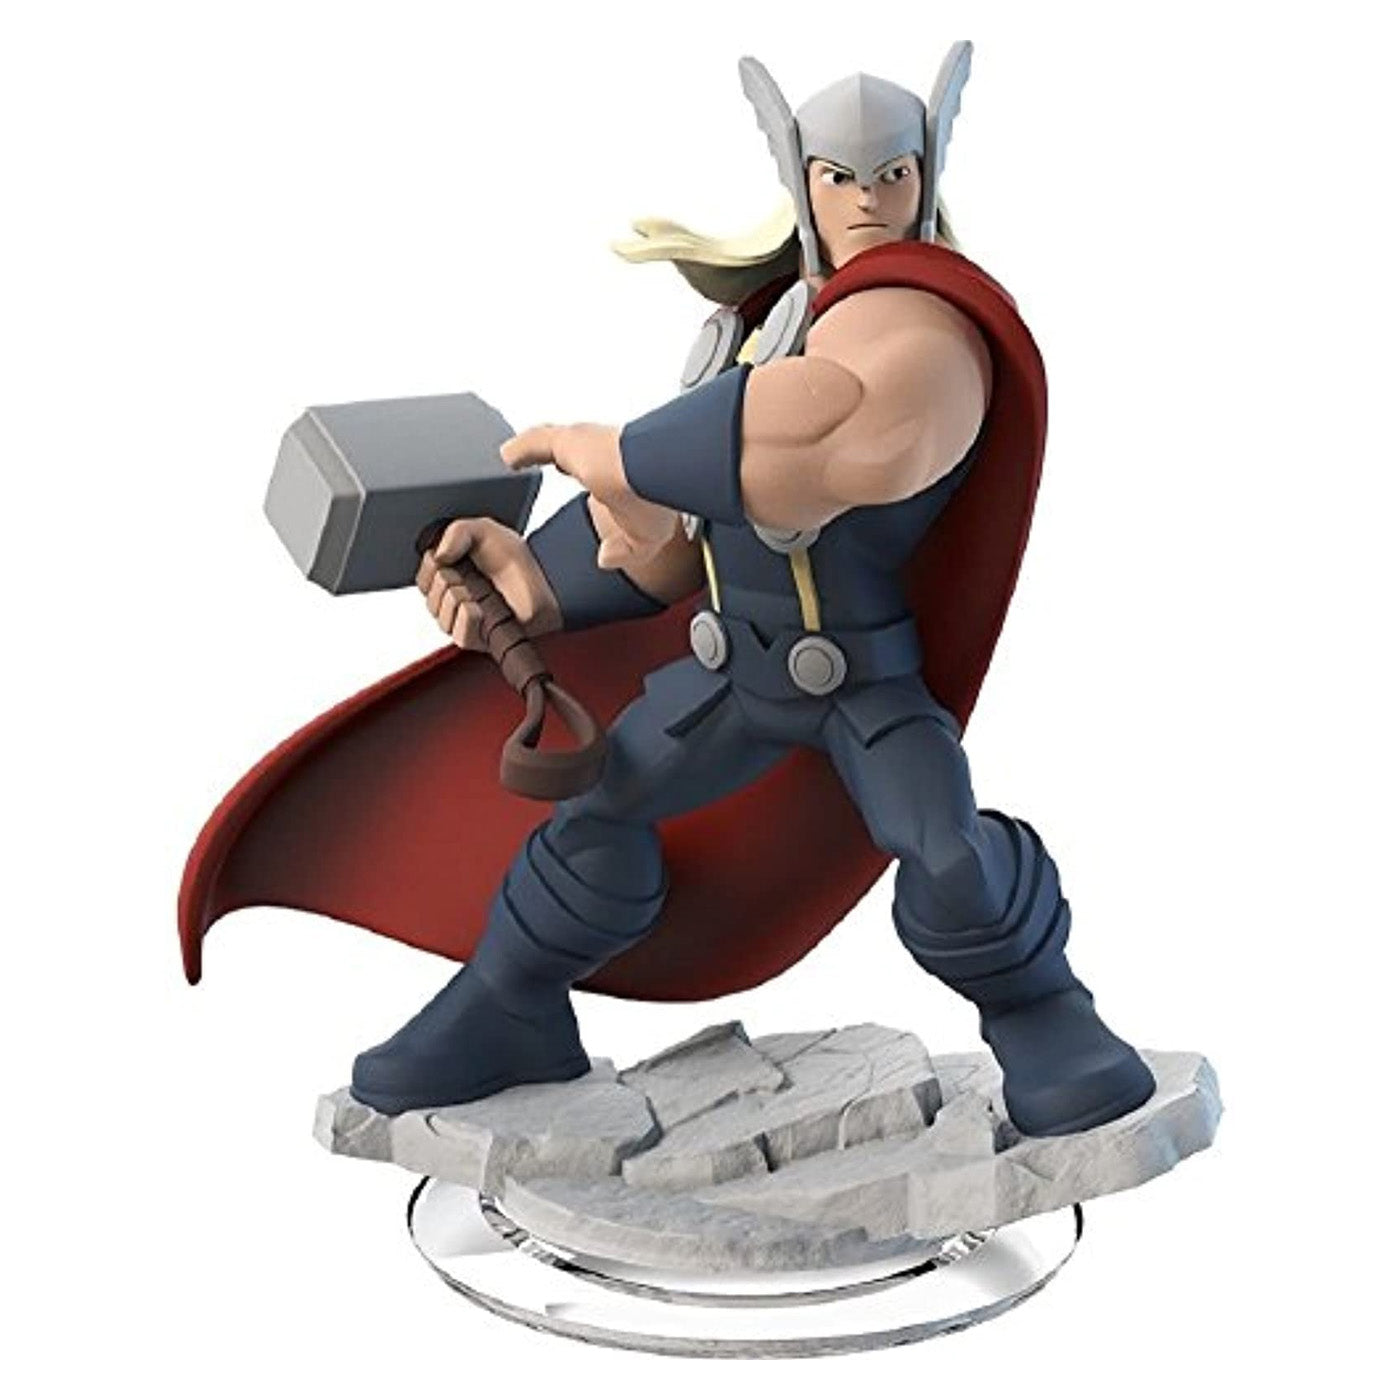 Disney Infinity 2.0 Character: Thor